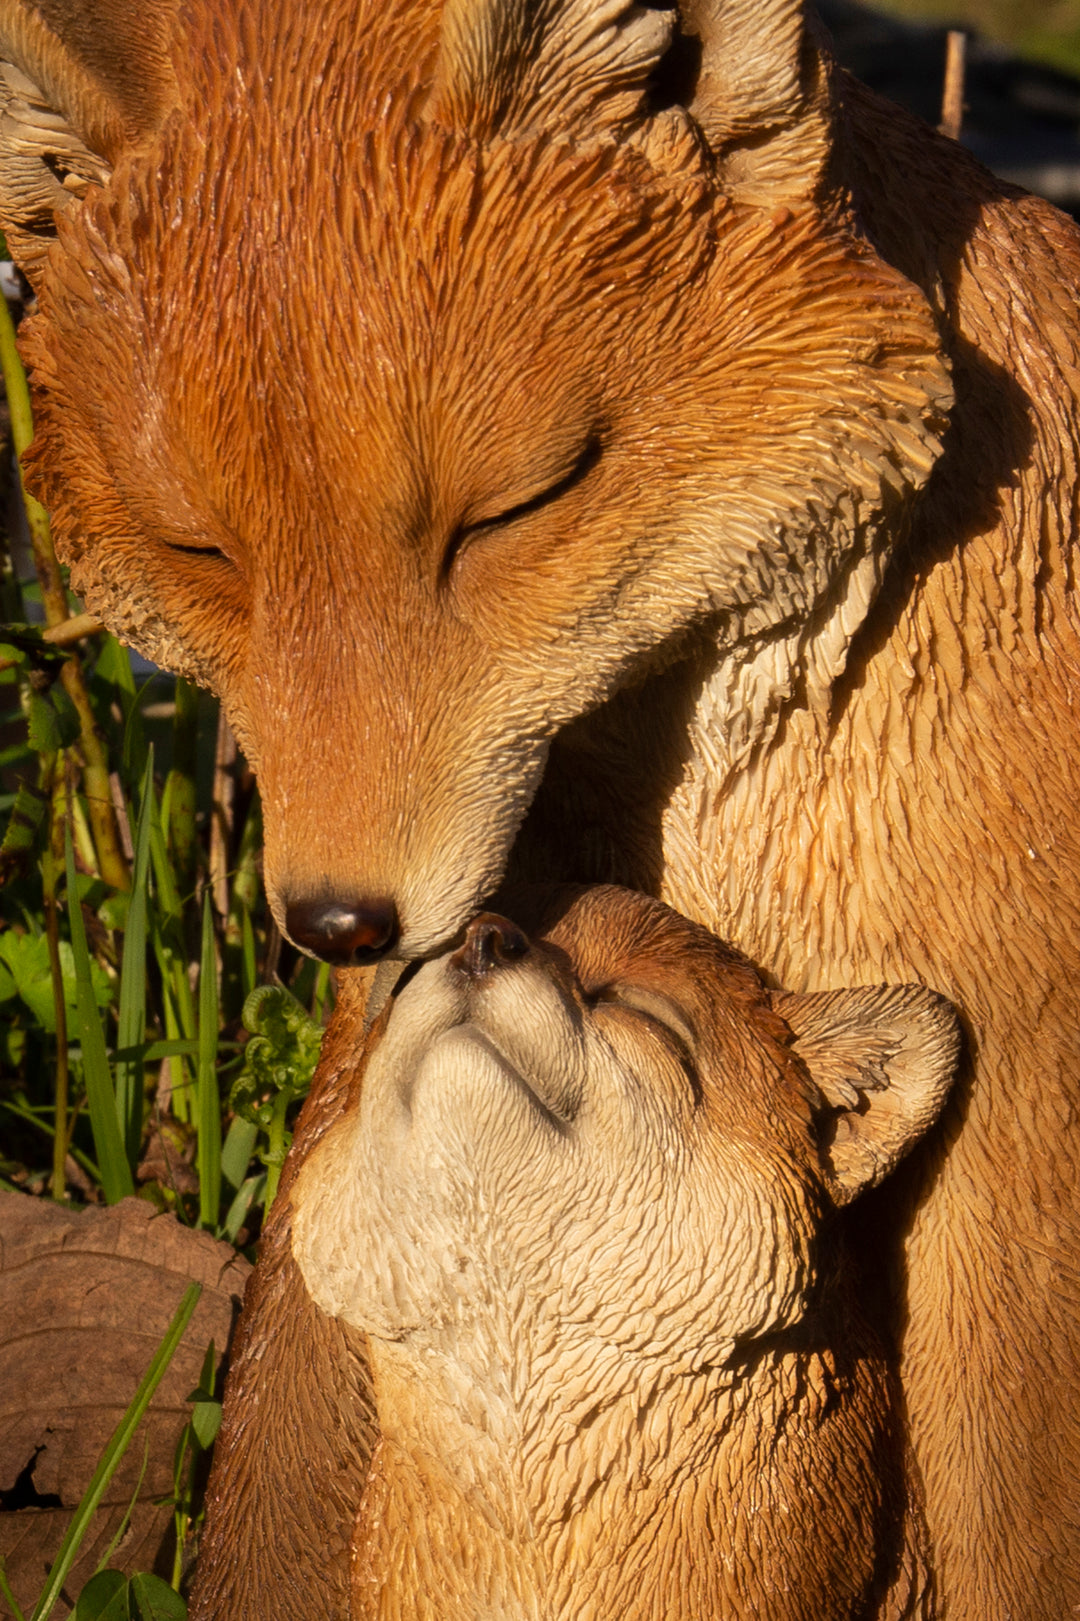 Cuddling Mother and Baby Fox Garden Statue HI-LINE GIFT LTD.